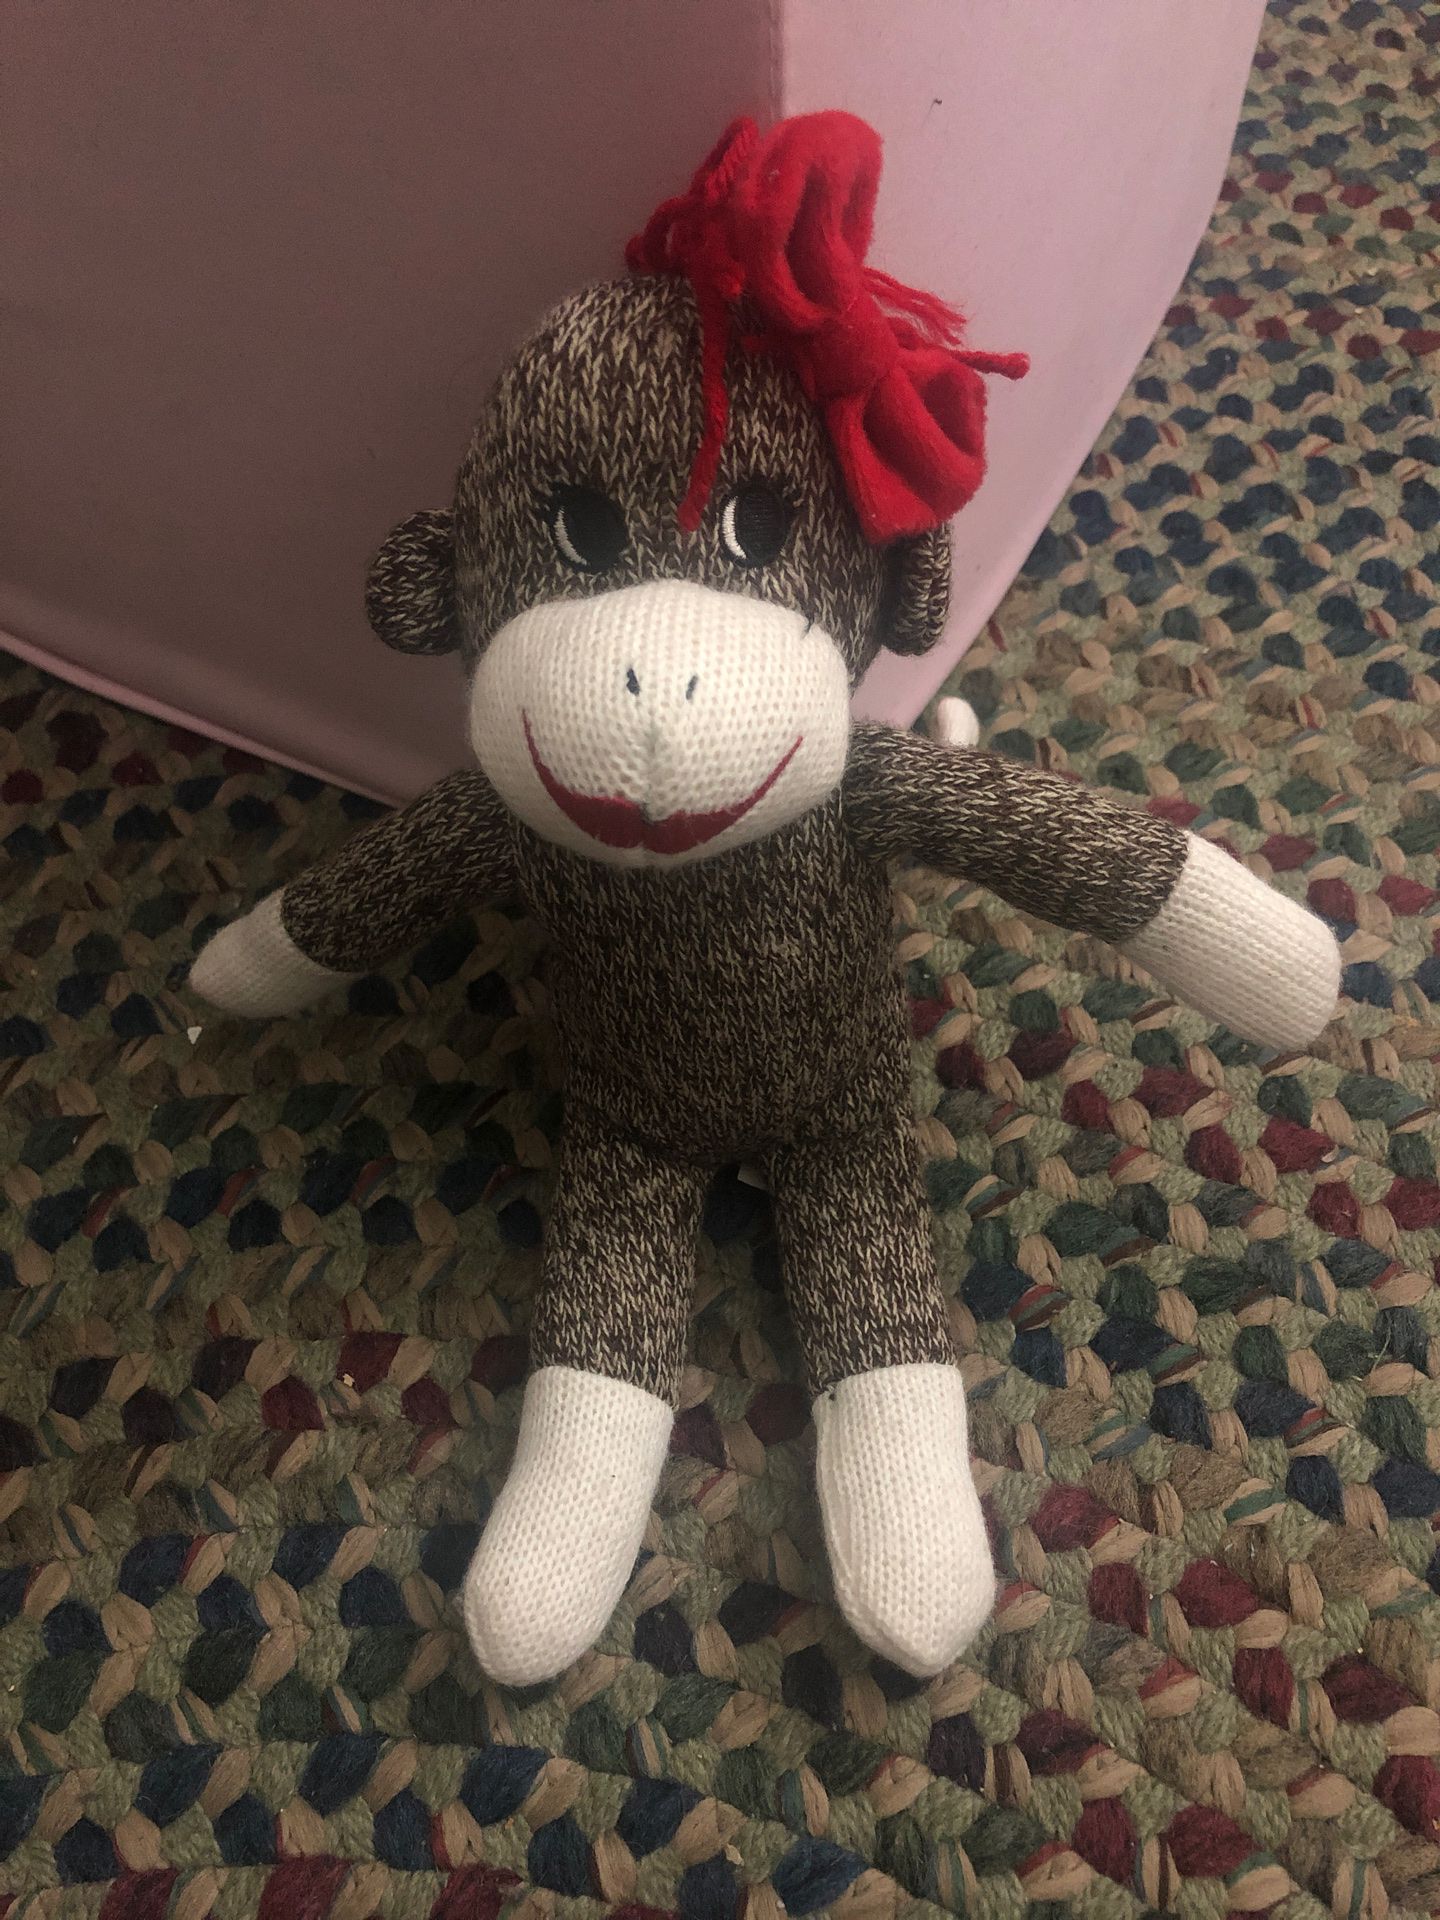 Monkey stuffed toy